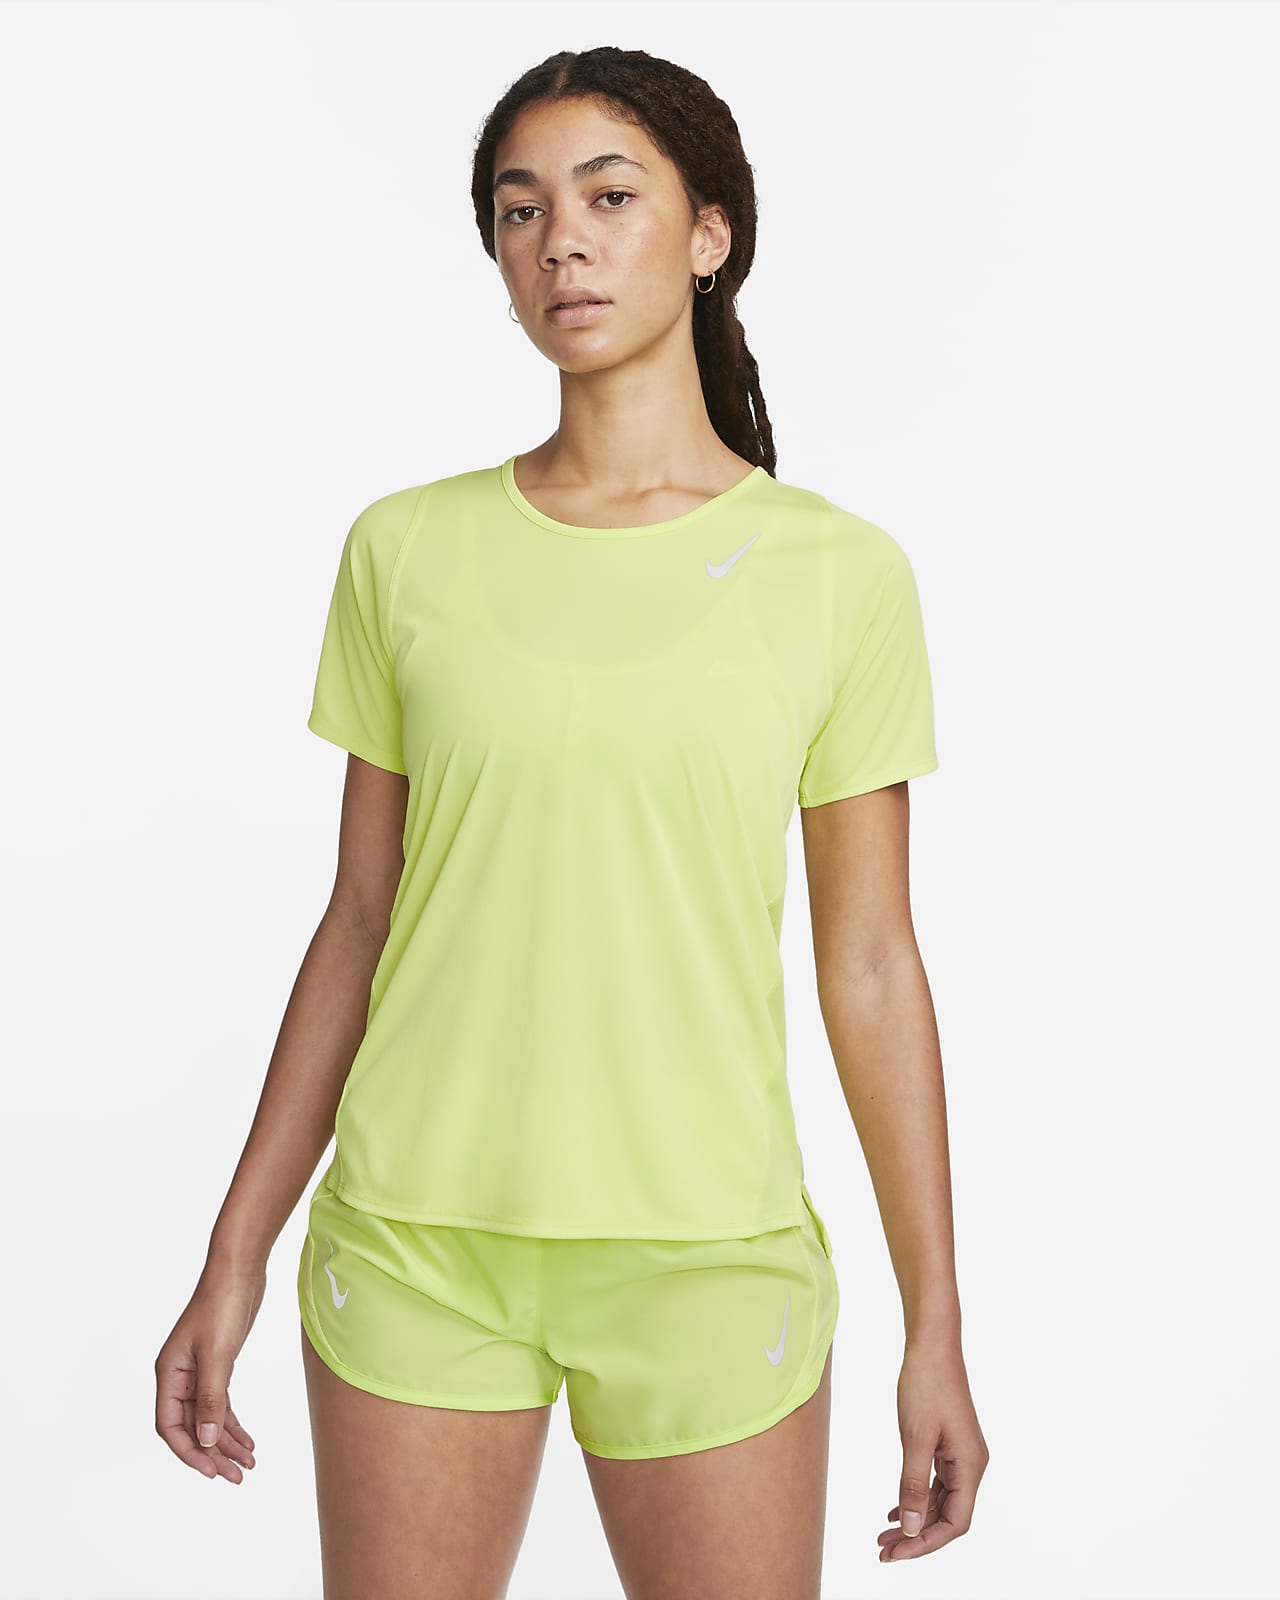 T-shirt Nike Dri-FIT Race Femme